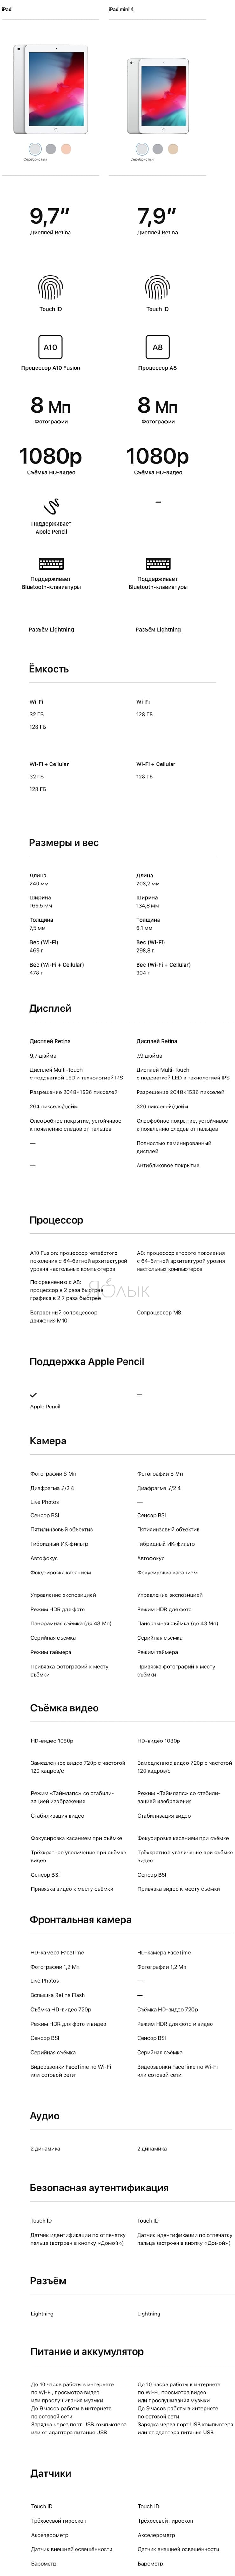 Подробное сравнение iPad (2018) и iPad mini 4